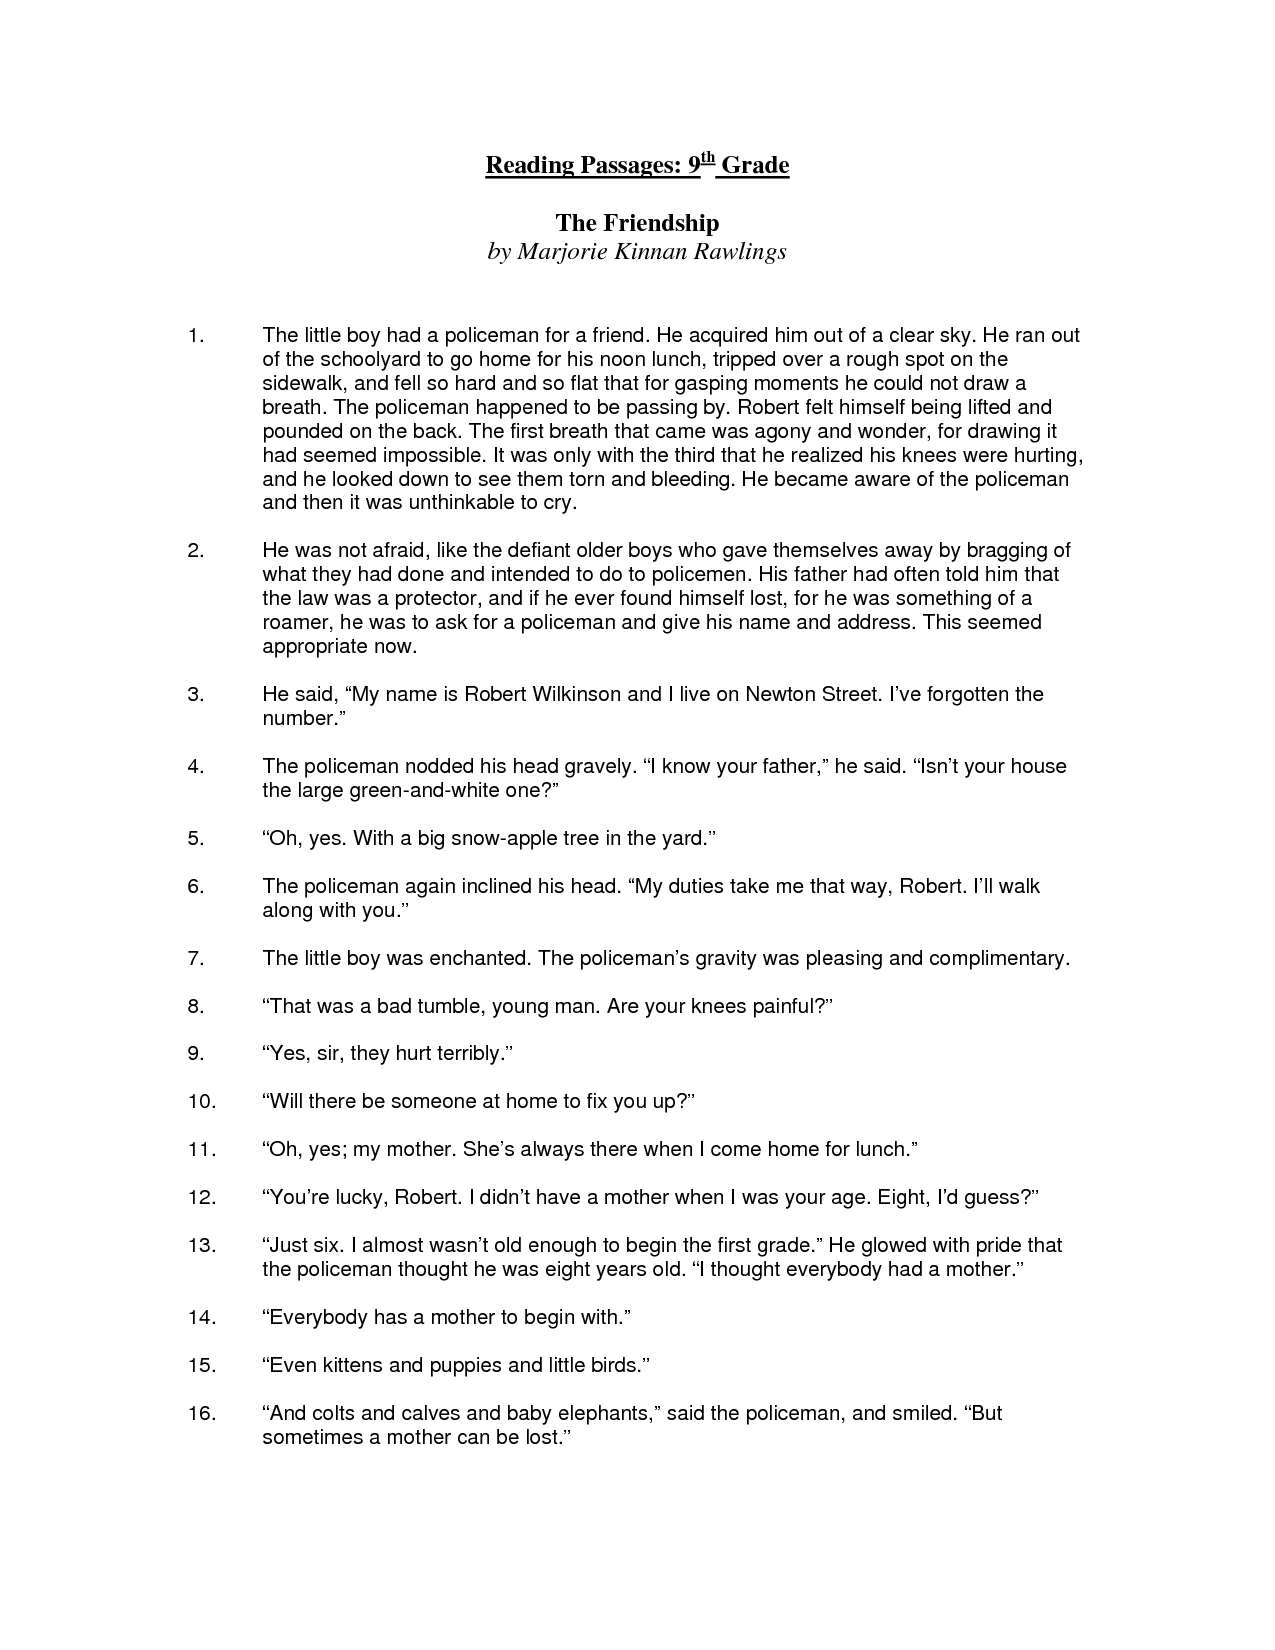 9th Grade Reading Comprehension Worksheets